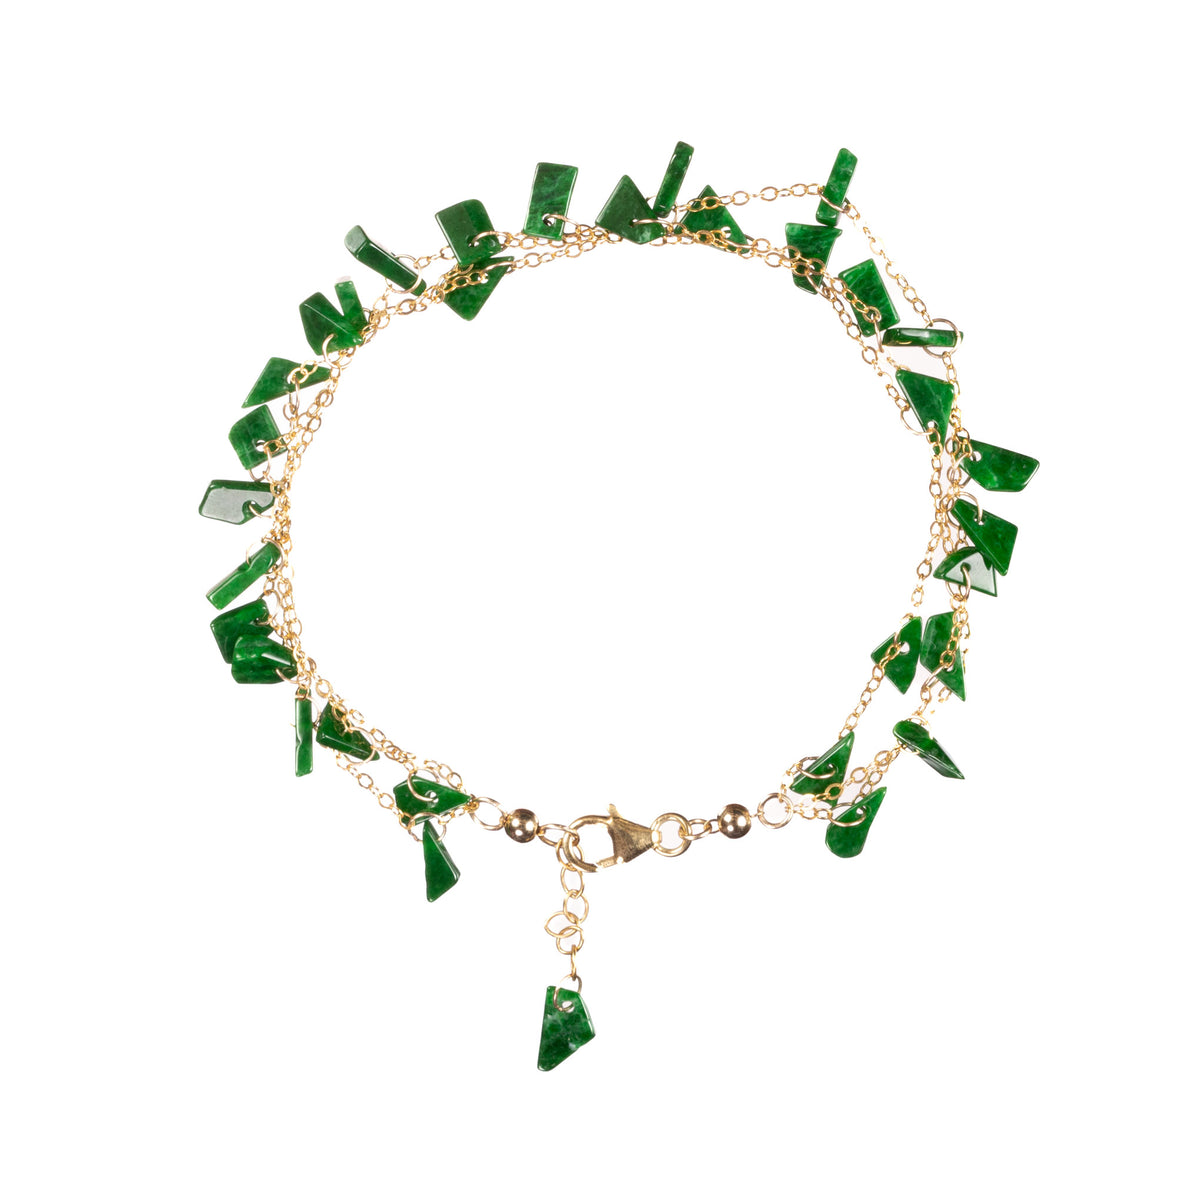 Multi Strand Jade Bracelet with 14K Gold Chain - Adjustable